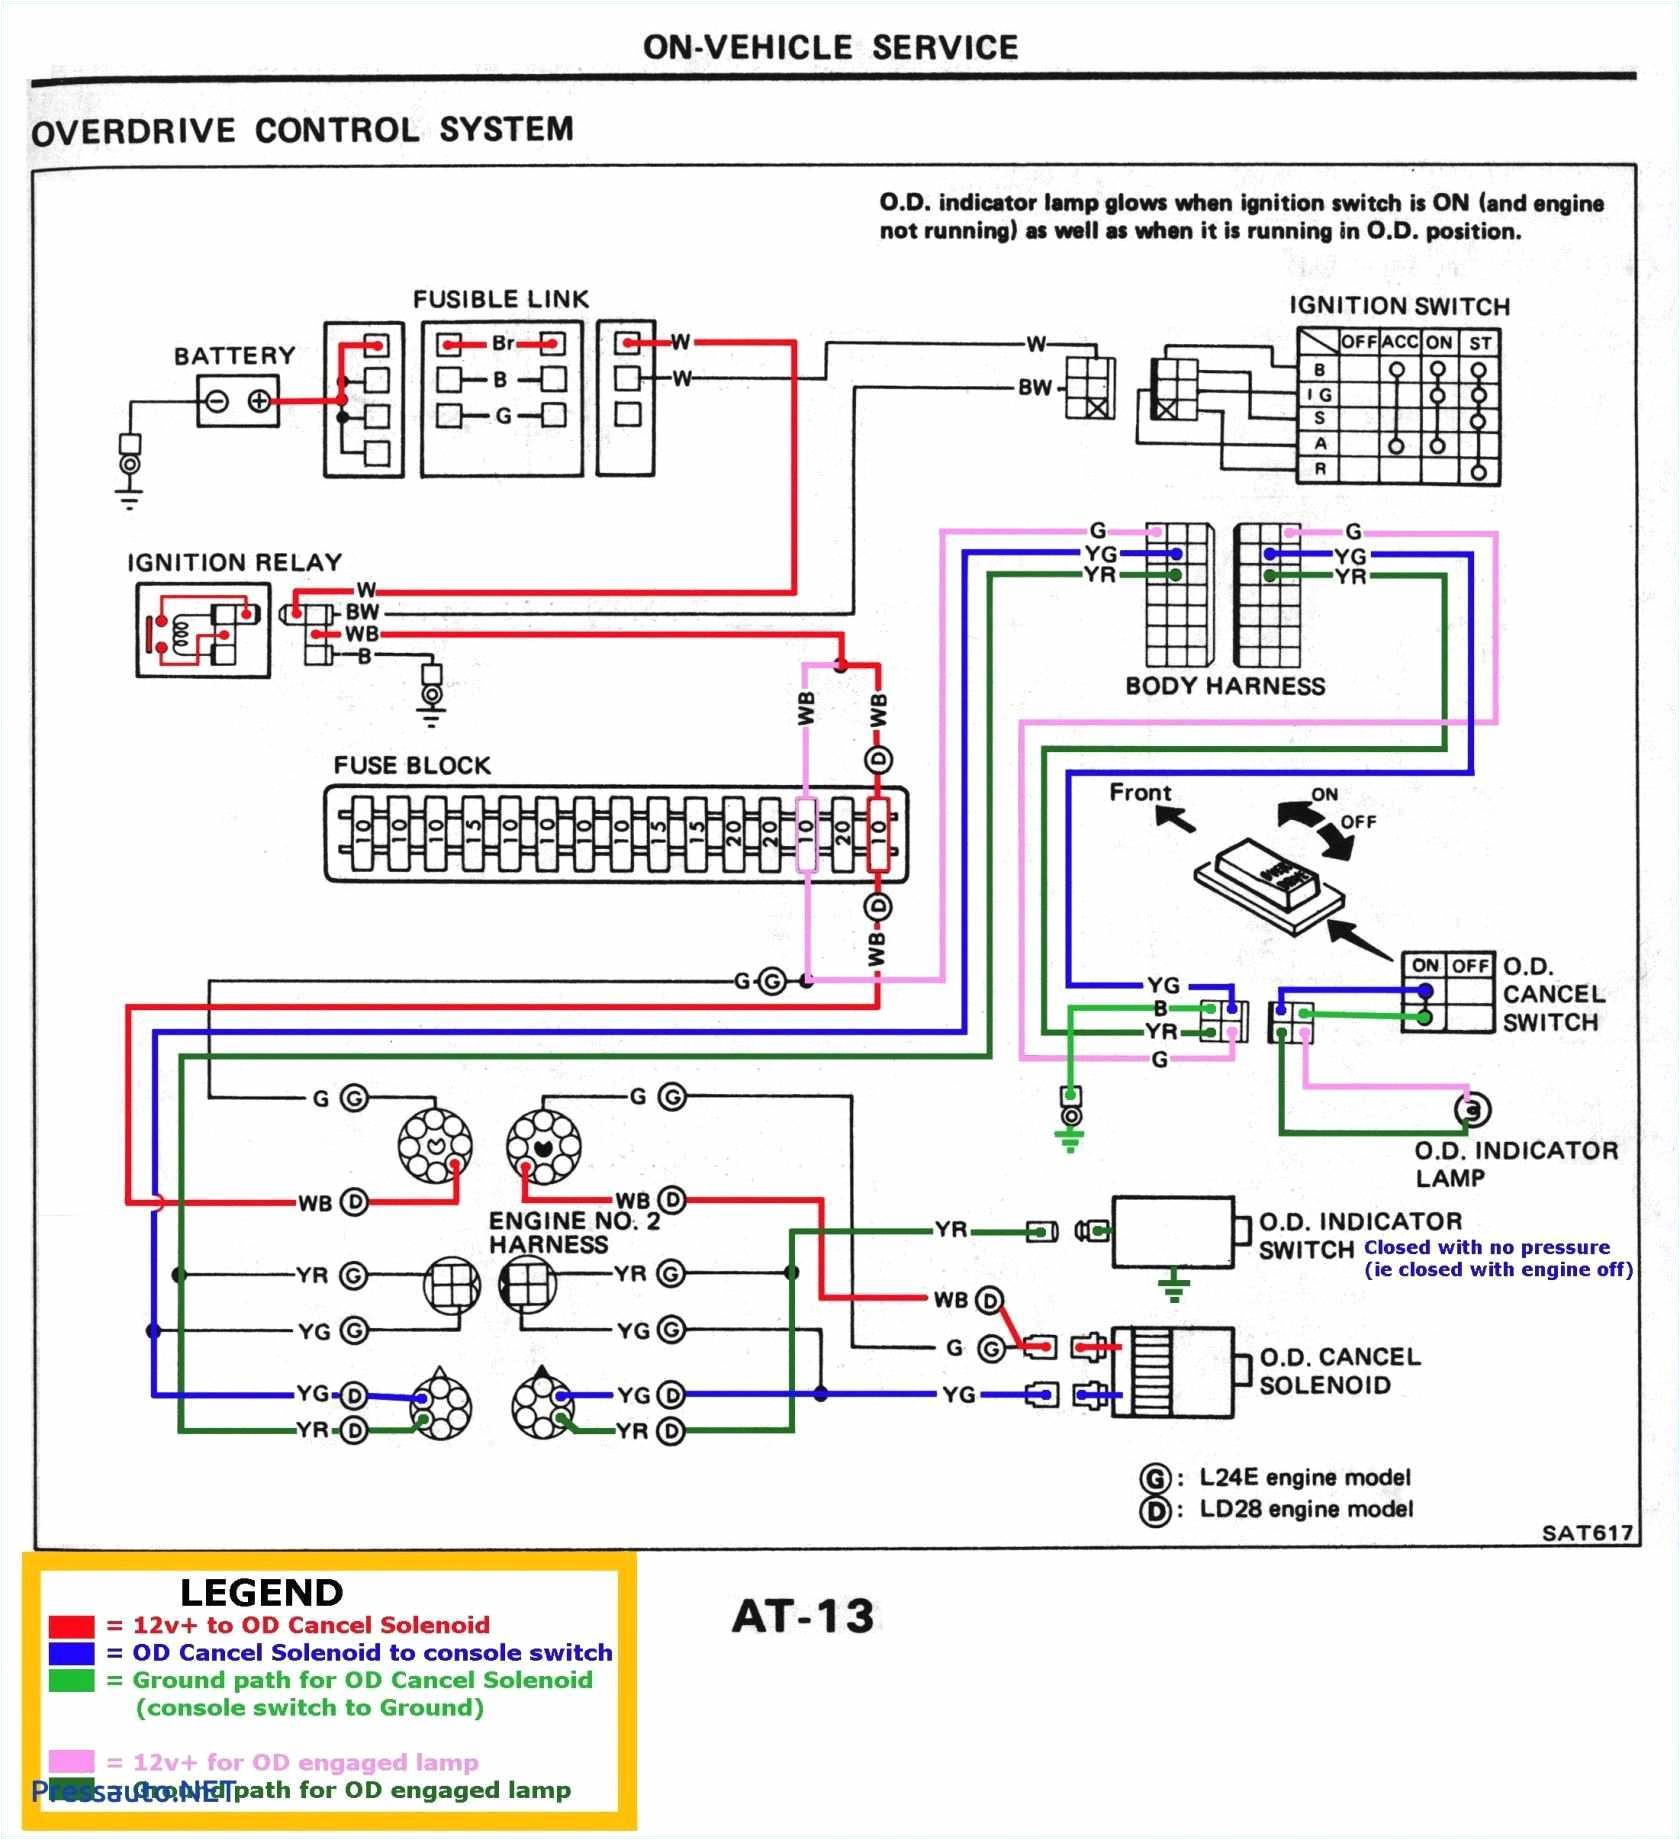 verucci 150 scooter wiring diagram wiring diagram databaseverucci wiring diagram wiring diagram name verucci 150 scooter